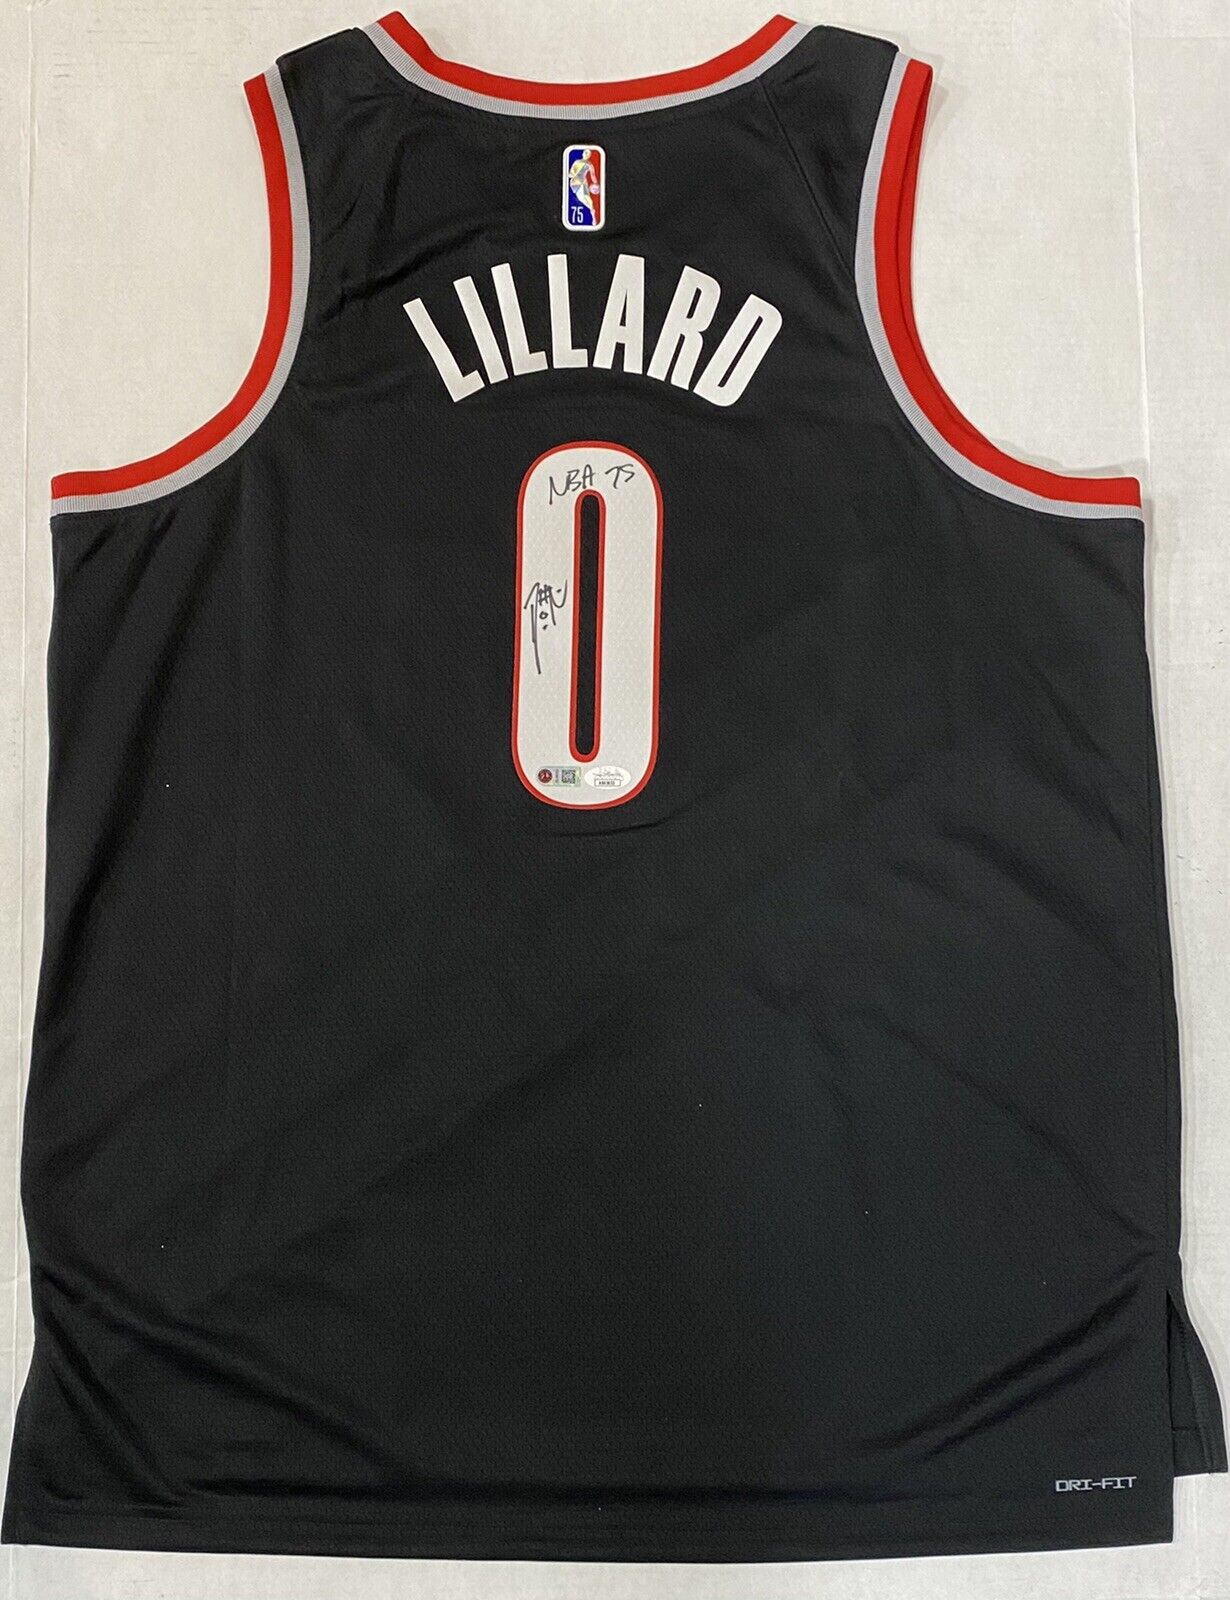 Portland Trail Blazers Damian Lillard Autographed Black Nike